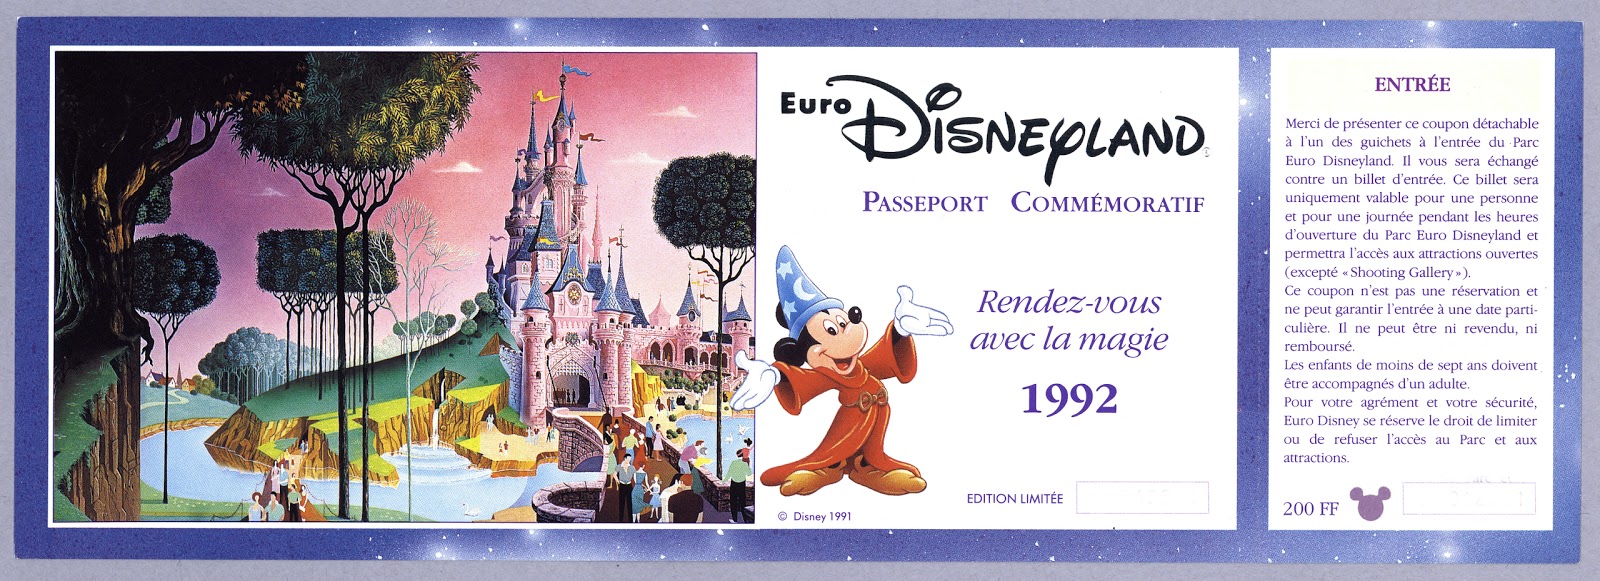 Vintage Disneyland Tickets: Euro Disneyland Commemorative Passport - 1992